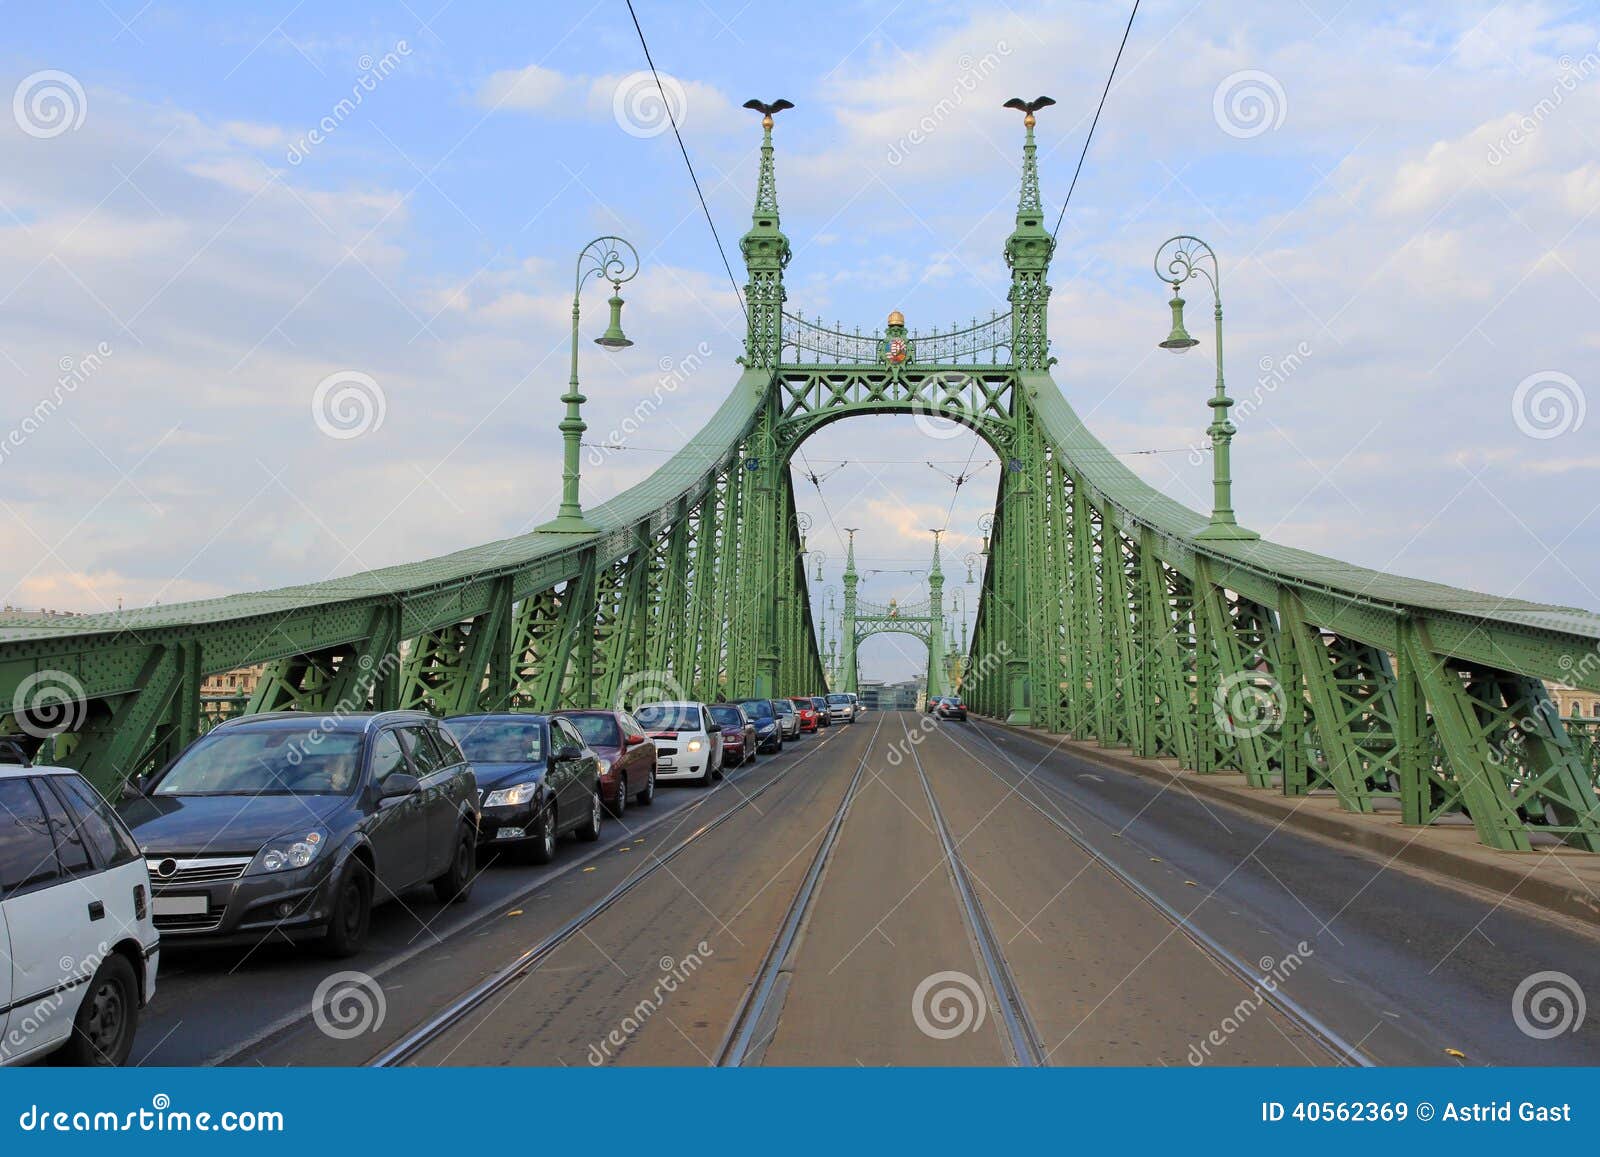 freedom bridge in budapest